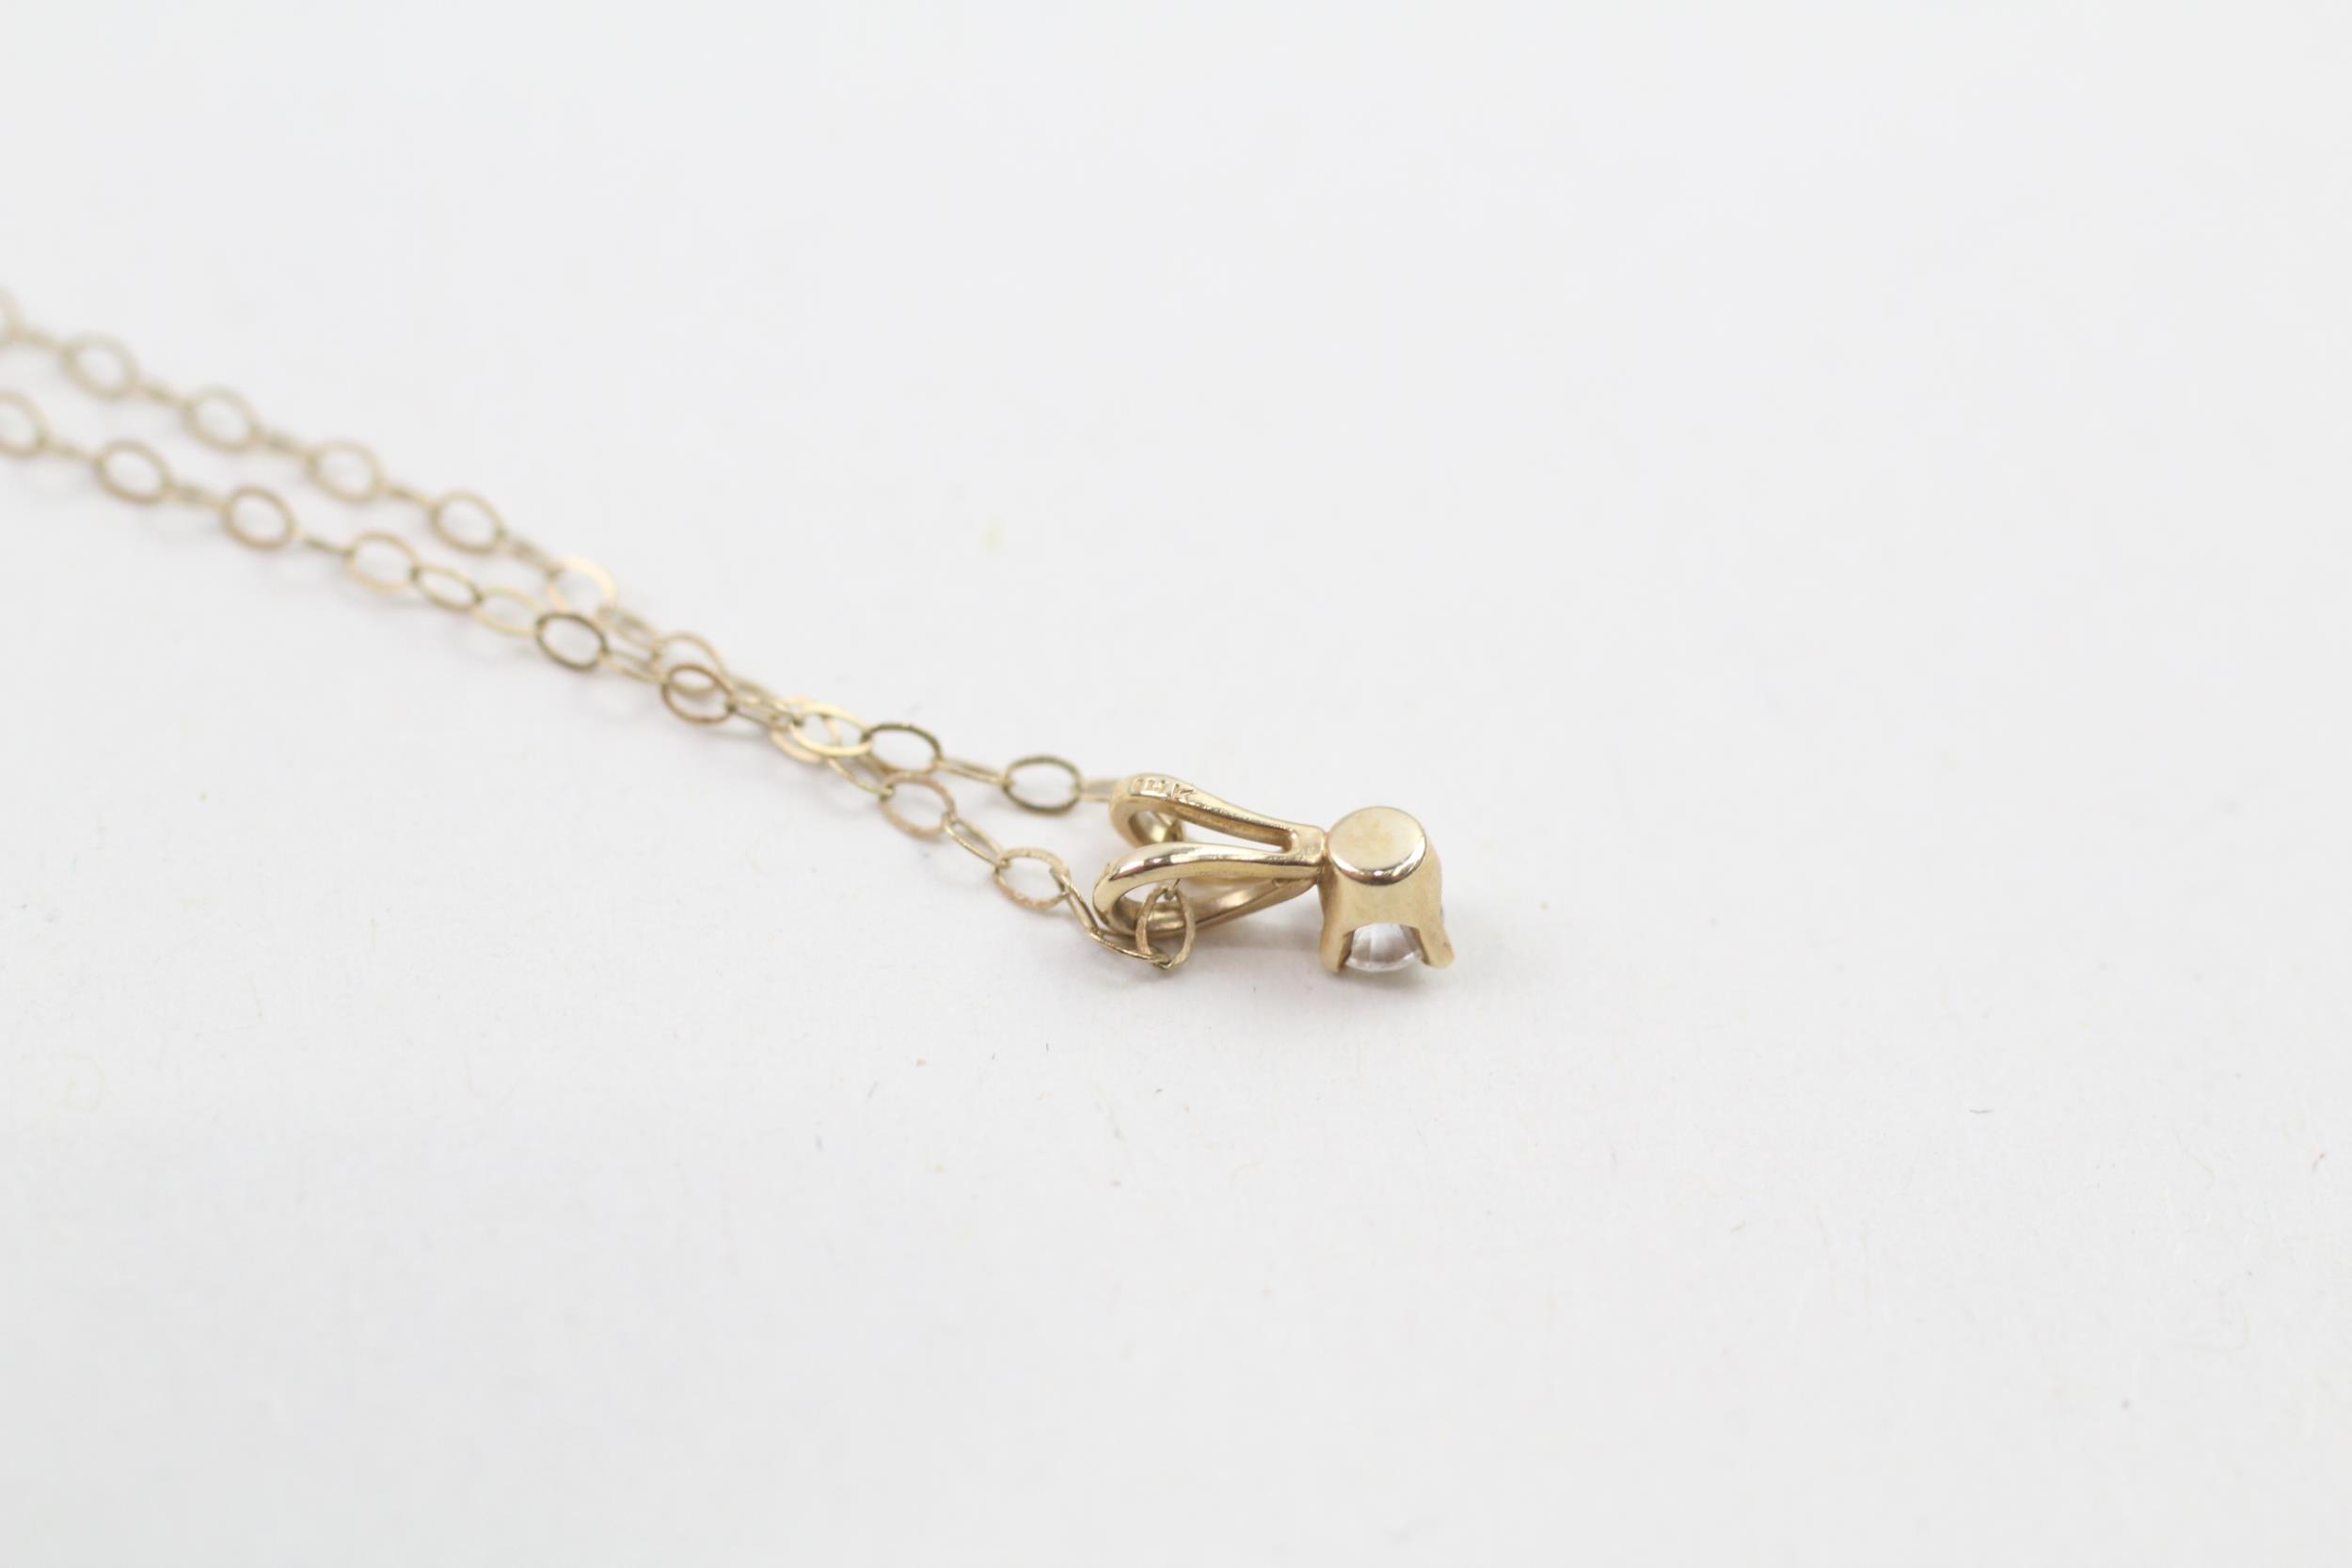 9ct gold round brilliant cut diamond pendant necklace (0.5g) - Image 4 of 4